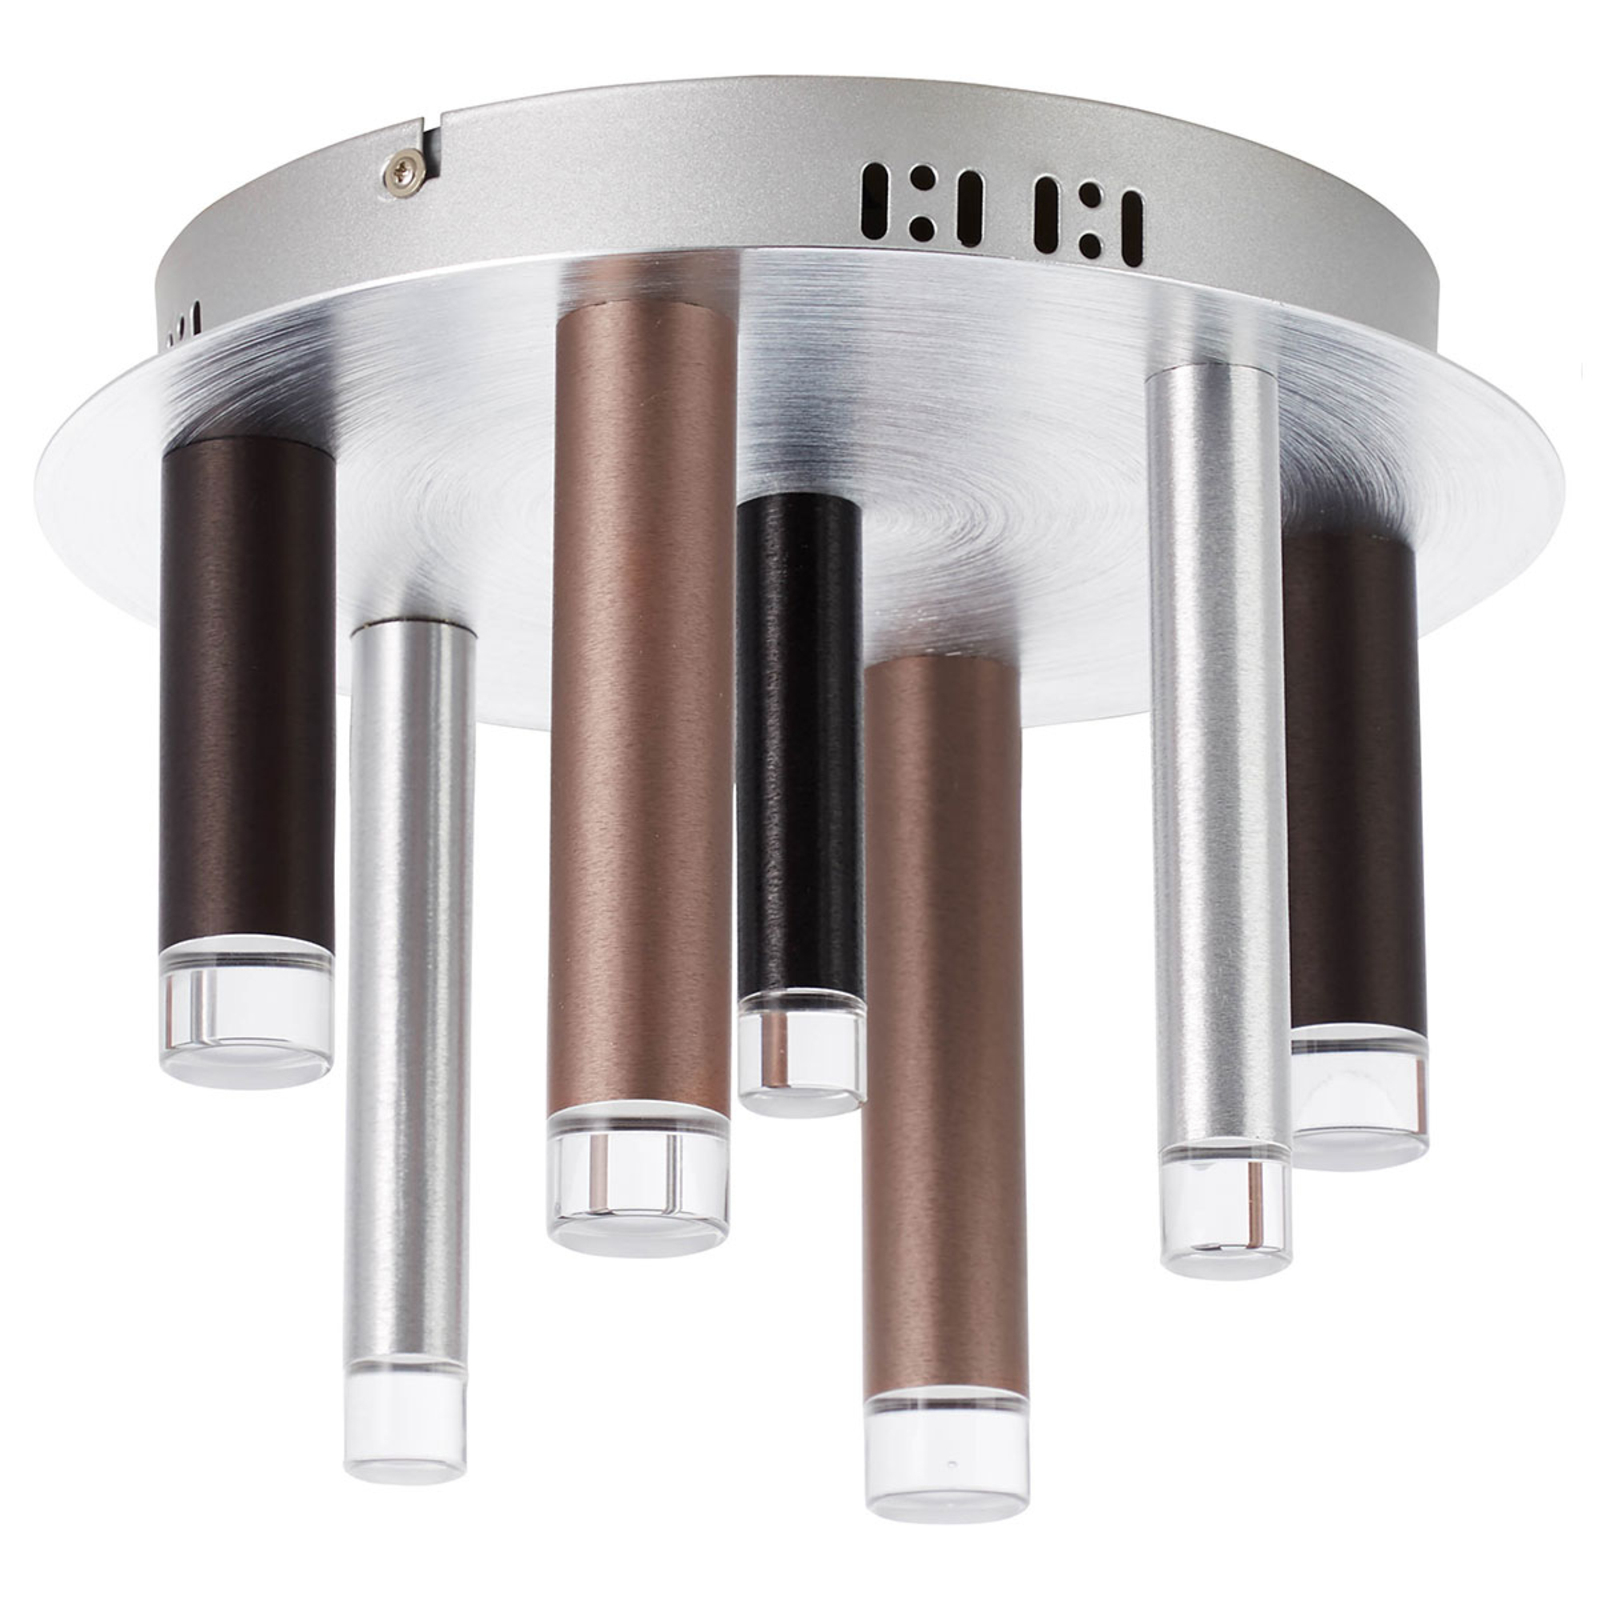 LED lubinis šviestuvas Cembalo dimmable 7-flame